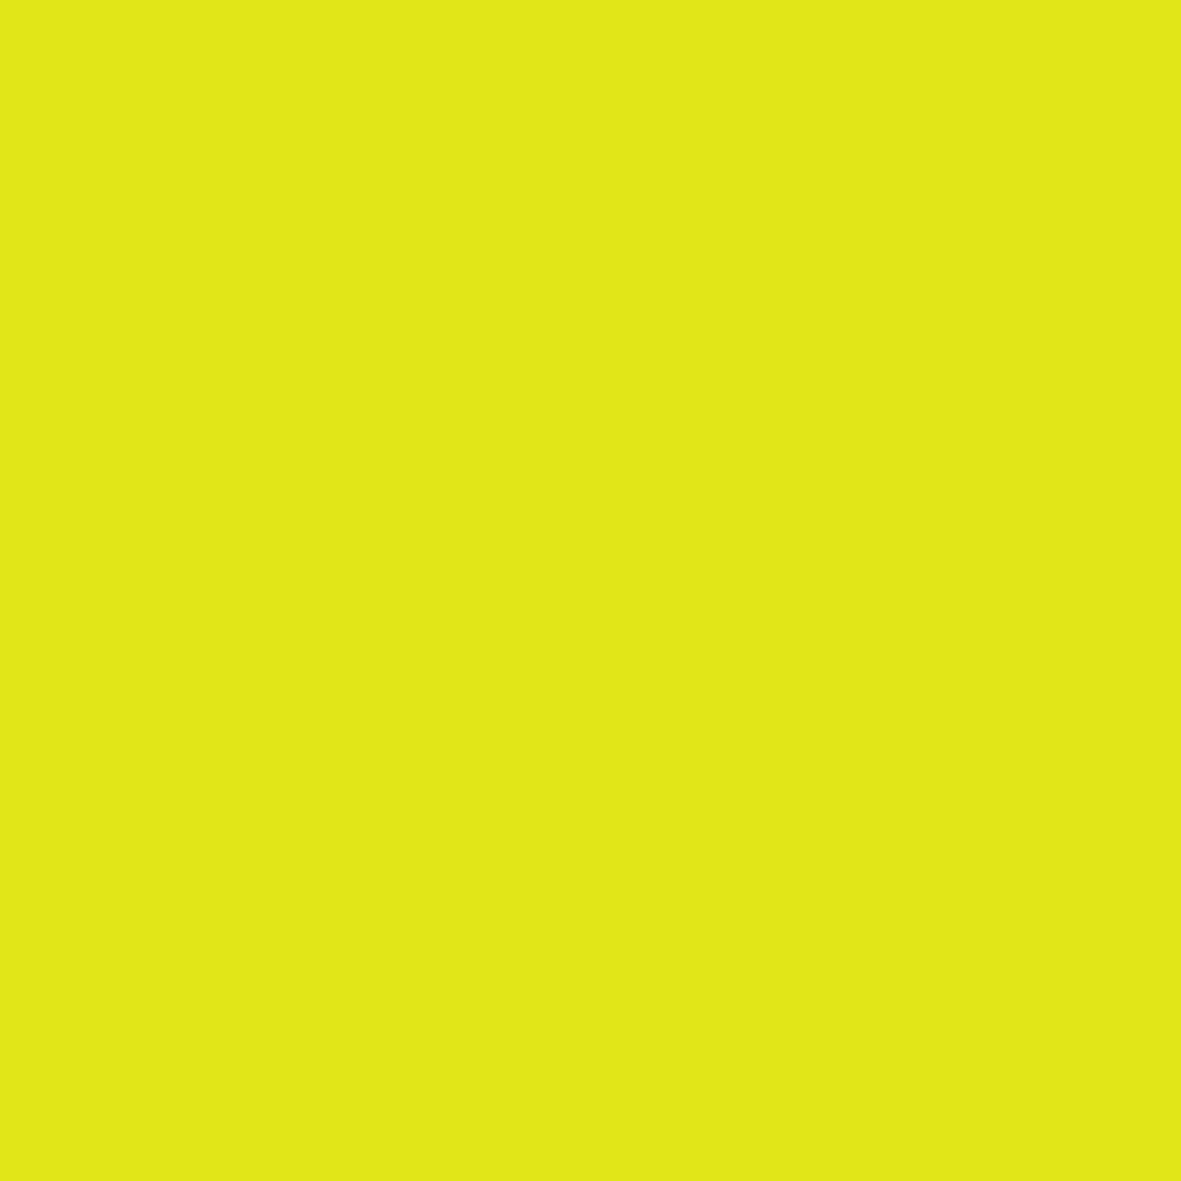 BigDean Sprühlack Acryllack glänzend 2x neon - Spraydose 400ml Sprühfarbe gelb